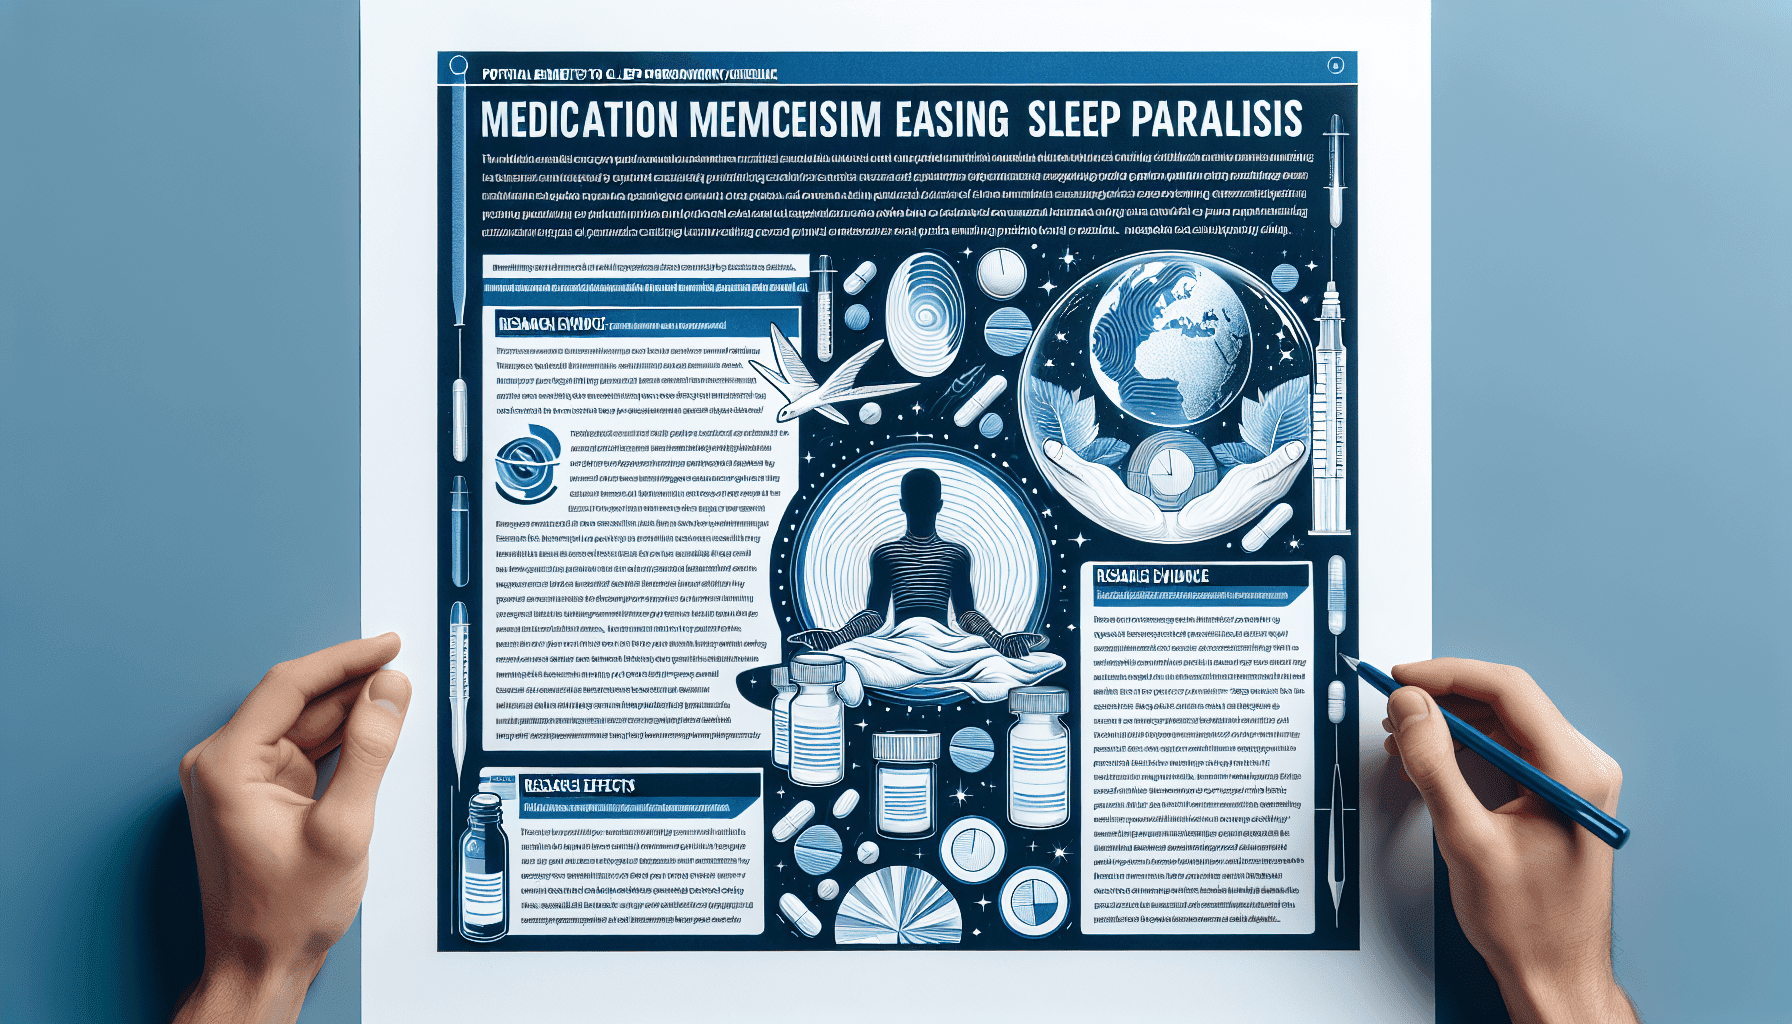 Can Medication Help In Reducing Sleep Paralysis?